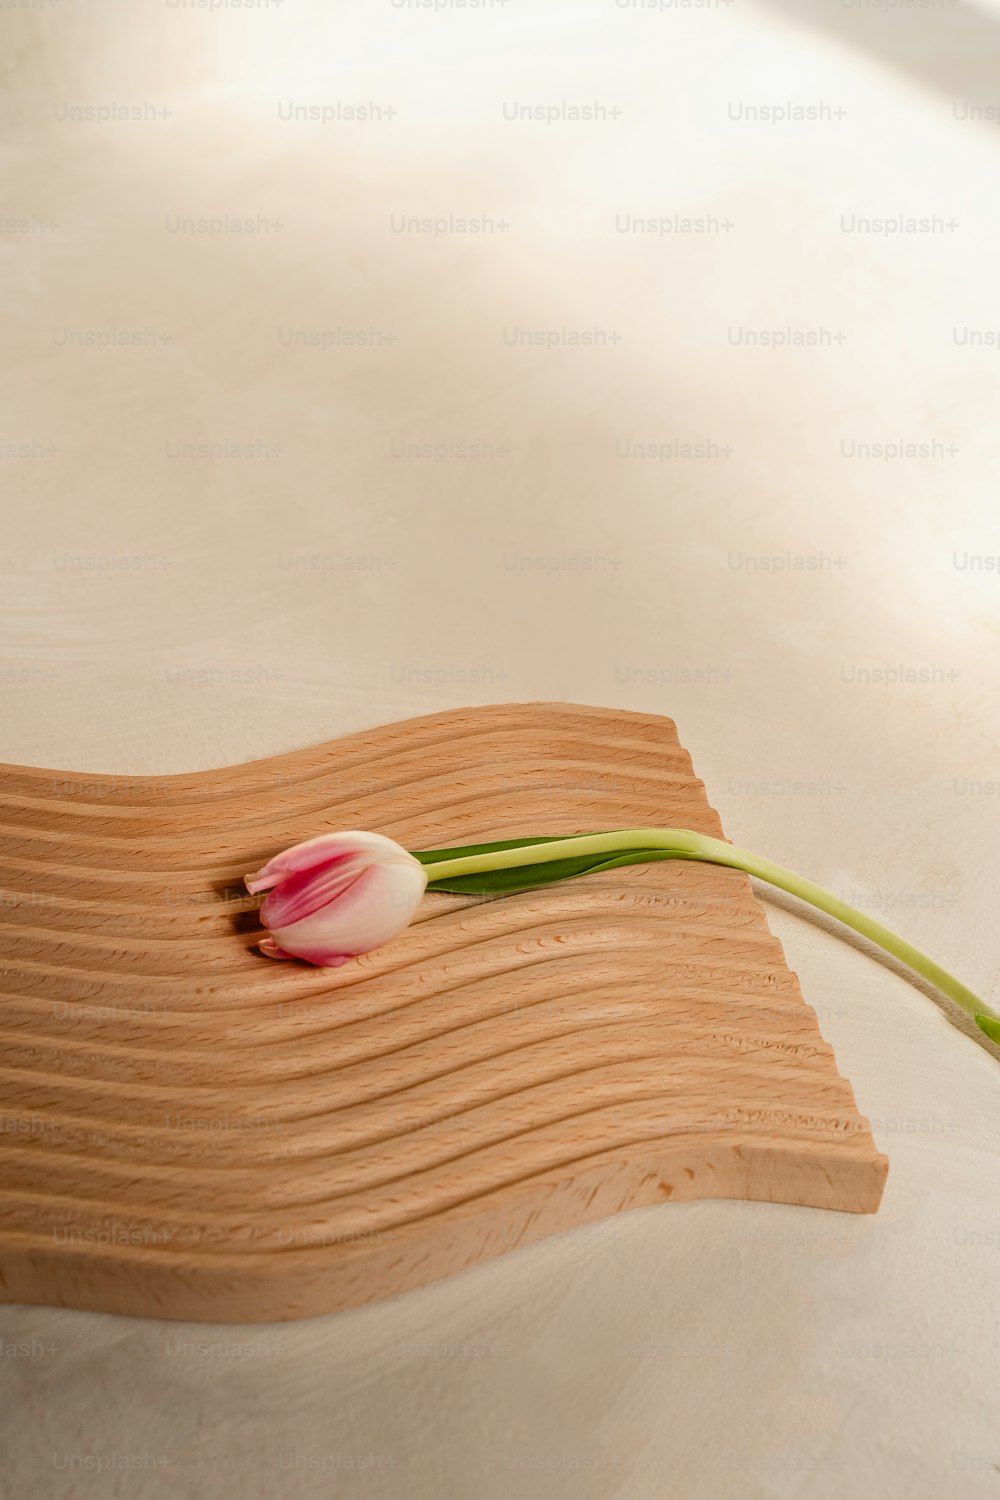 a single tulip on a wooden cutting board